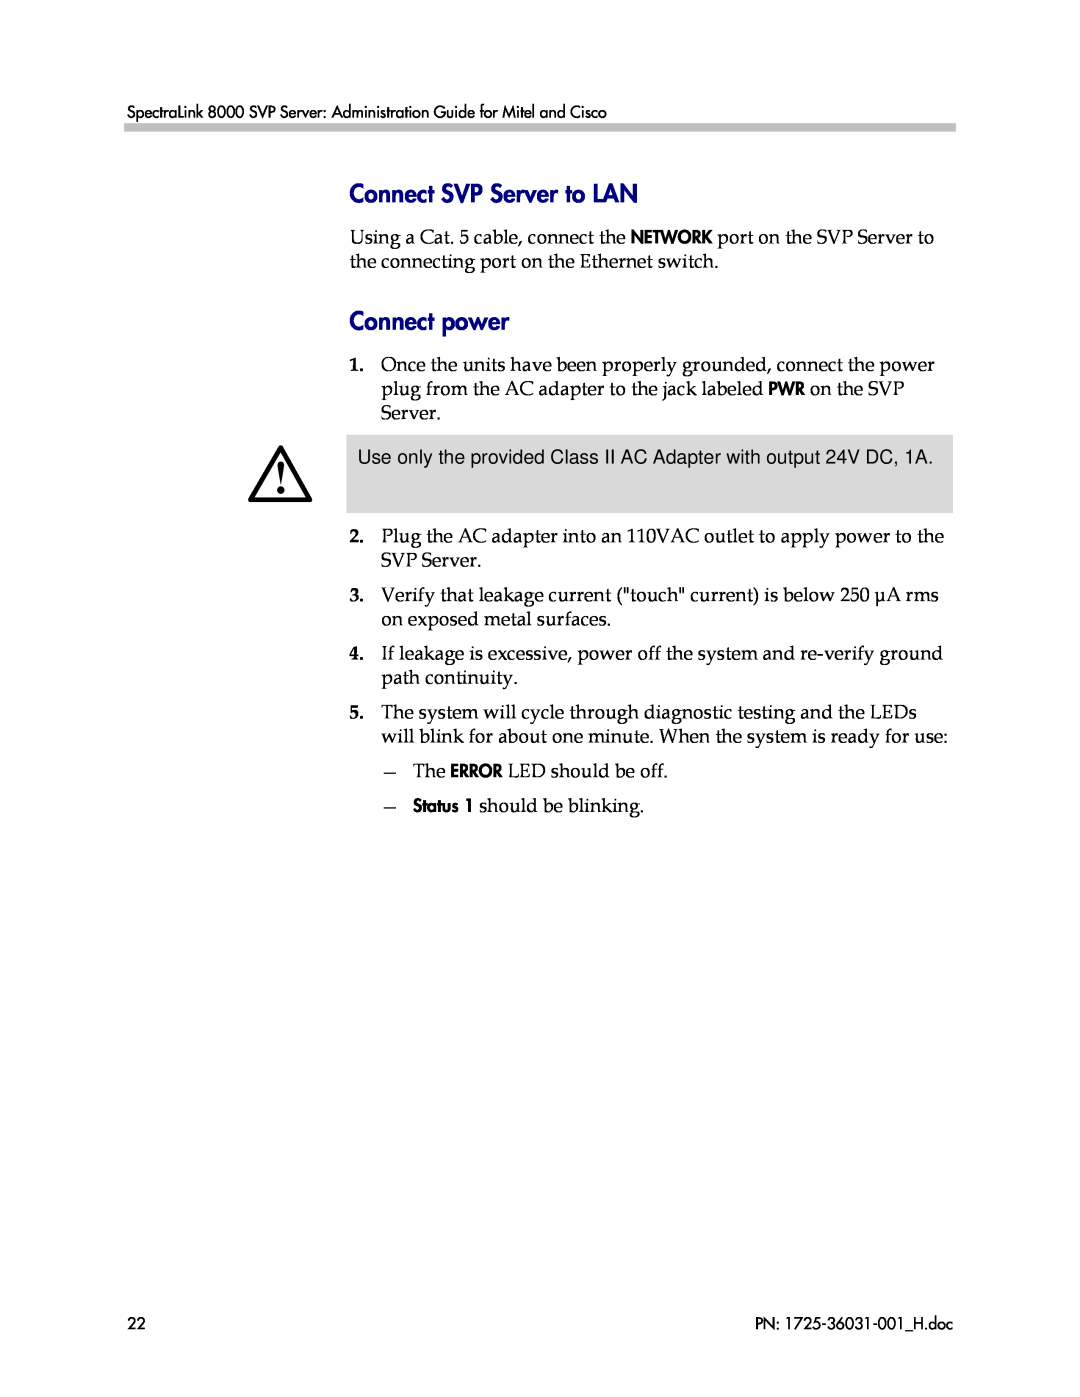 Polycom VP010, 1725-36031-001 manual Connect SVP Server to LAN, Connect power 